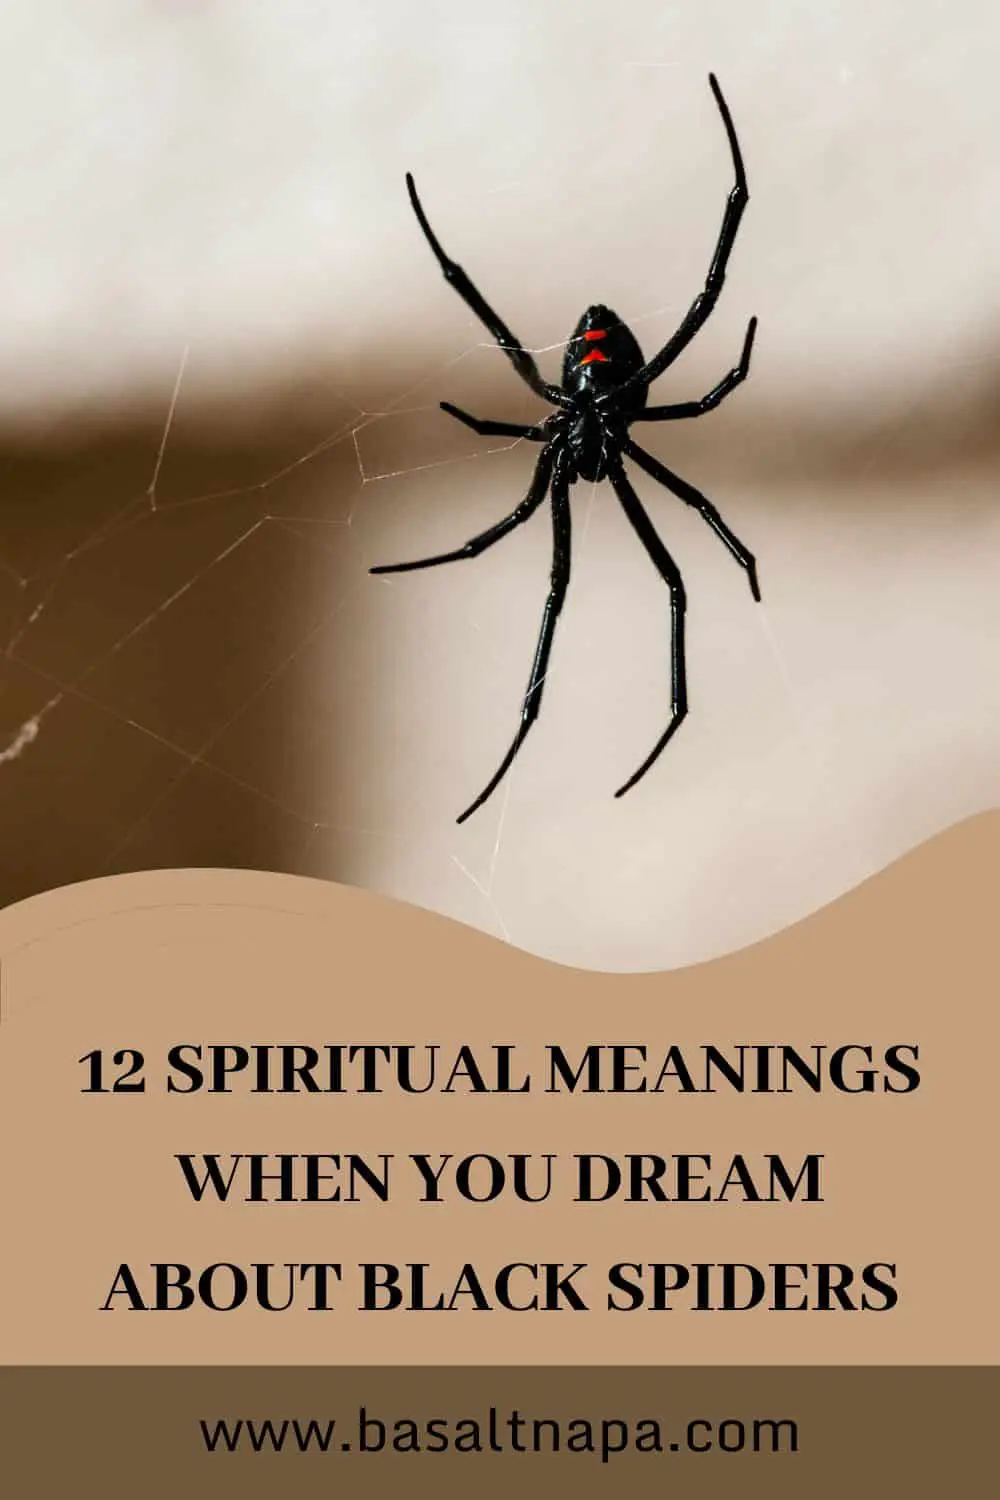 Other Factors Influencing Spider Bite Dreams